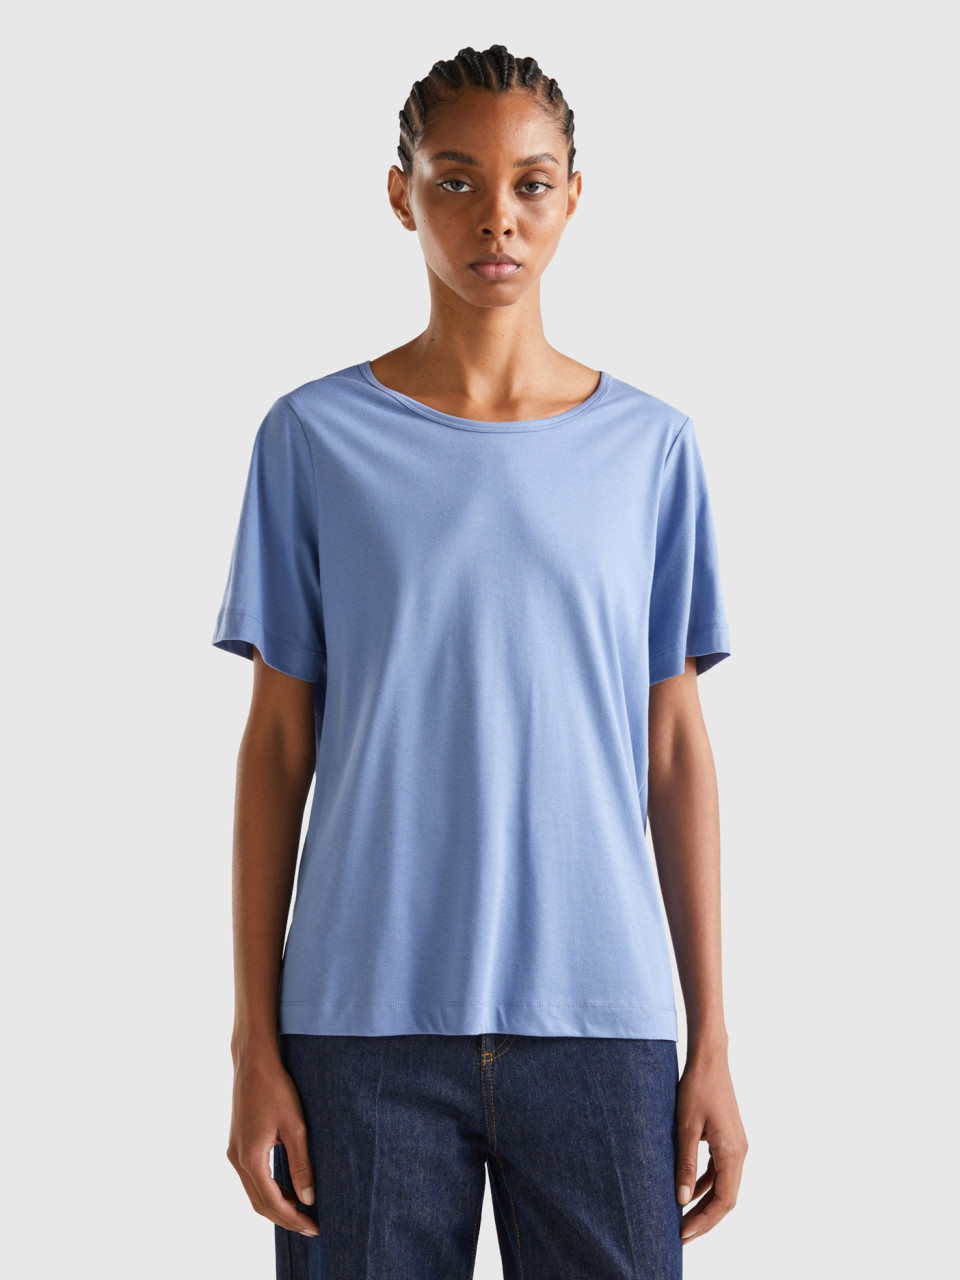 Benetton, T-shirt Bleu Clair À Manches Courtes, Bleu Clair, Femme